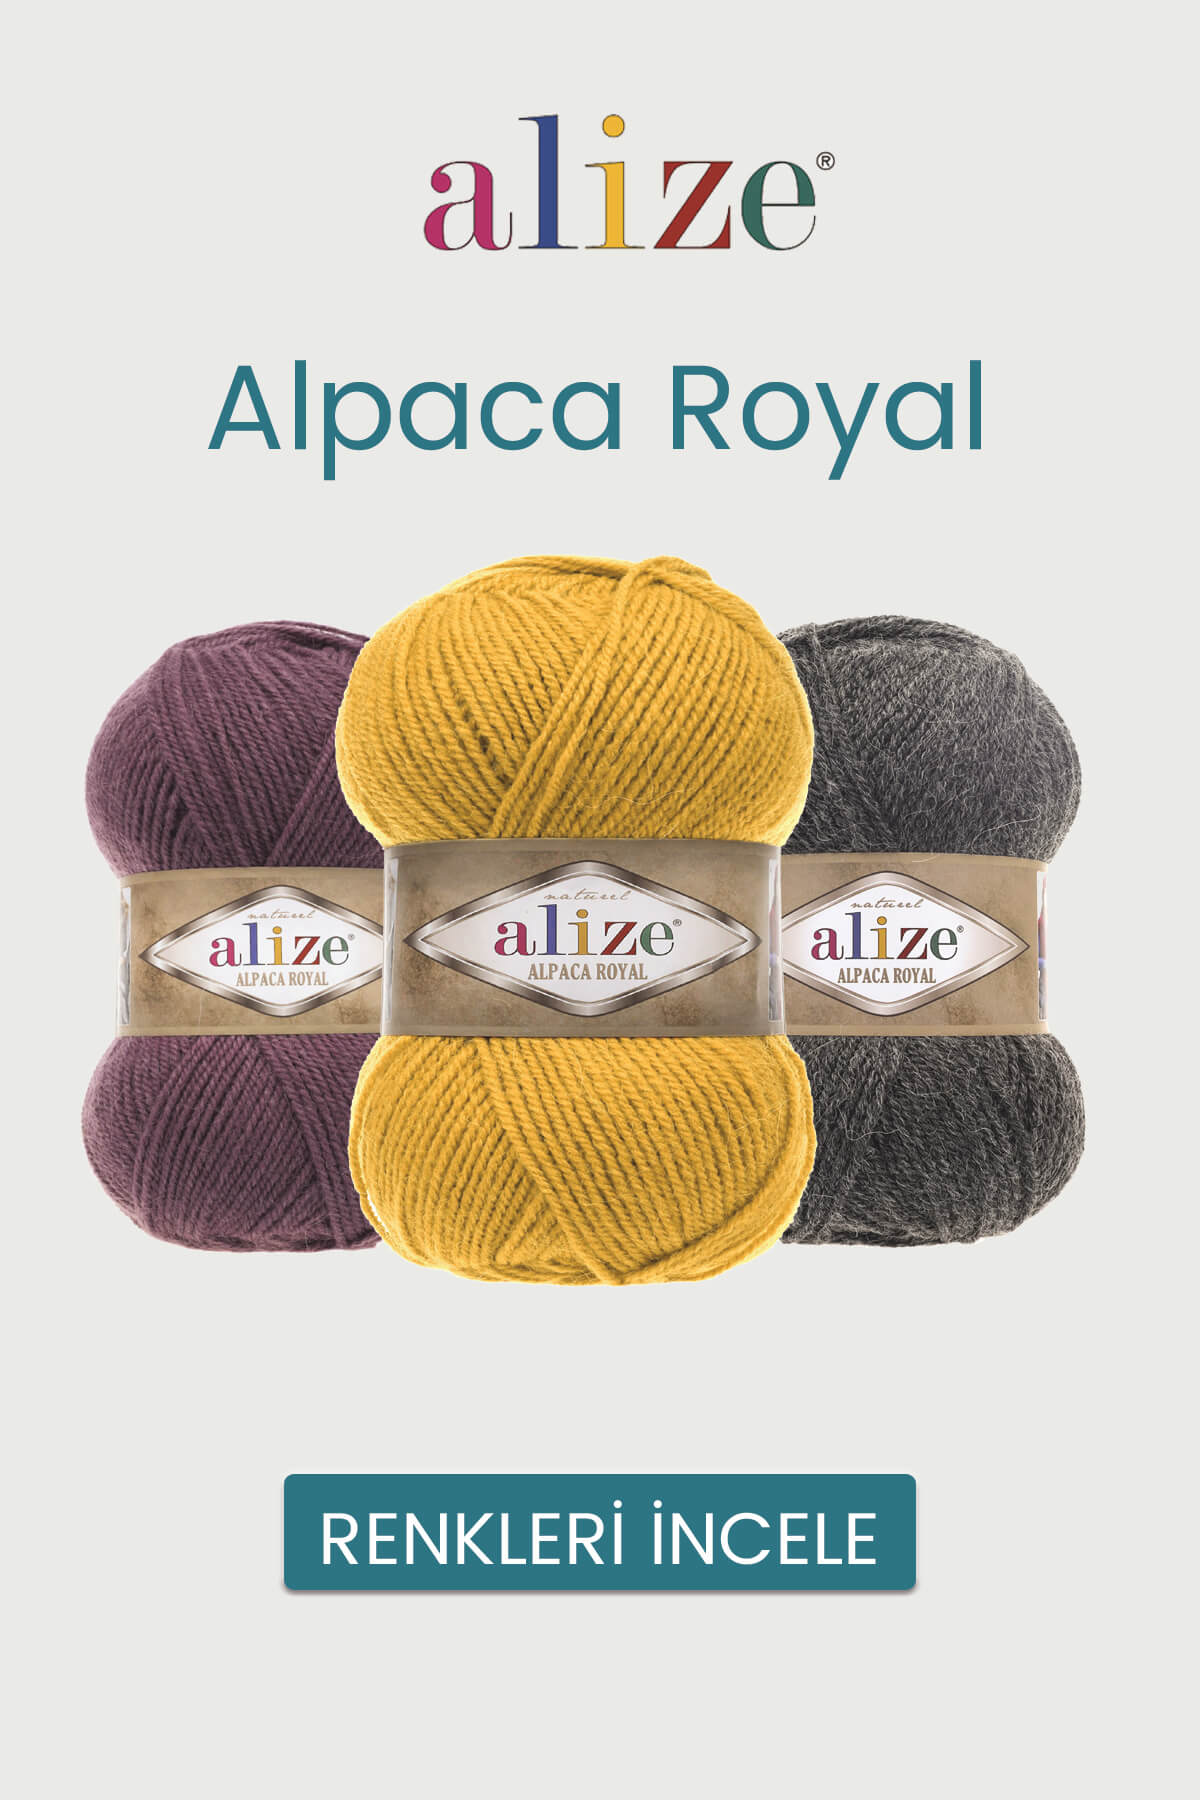 alize-alpaca-royal-tekstilland